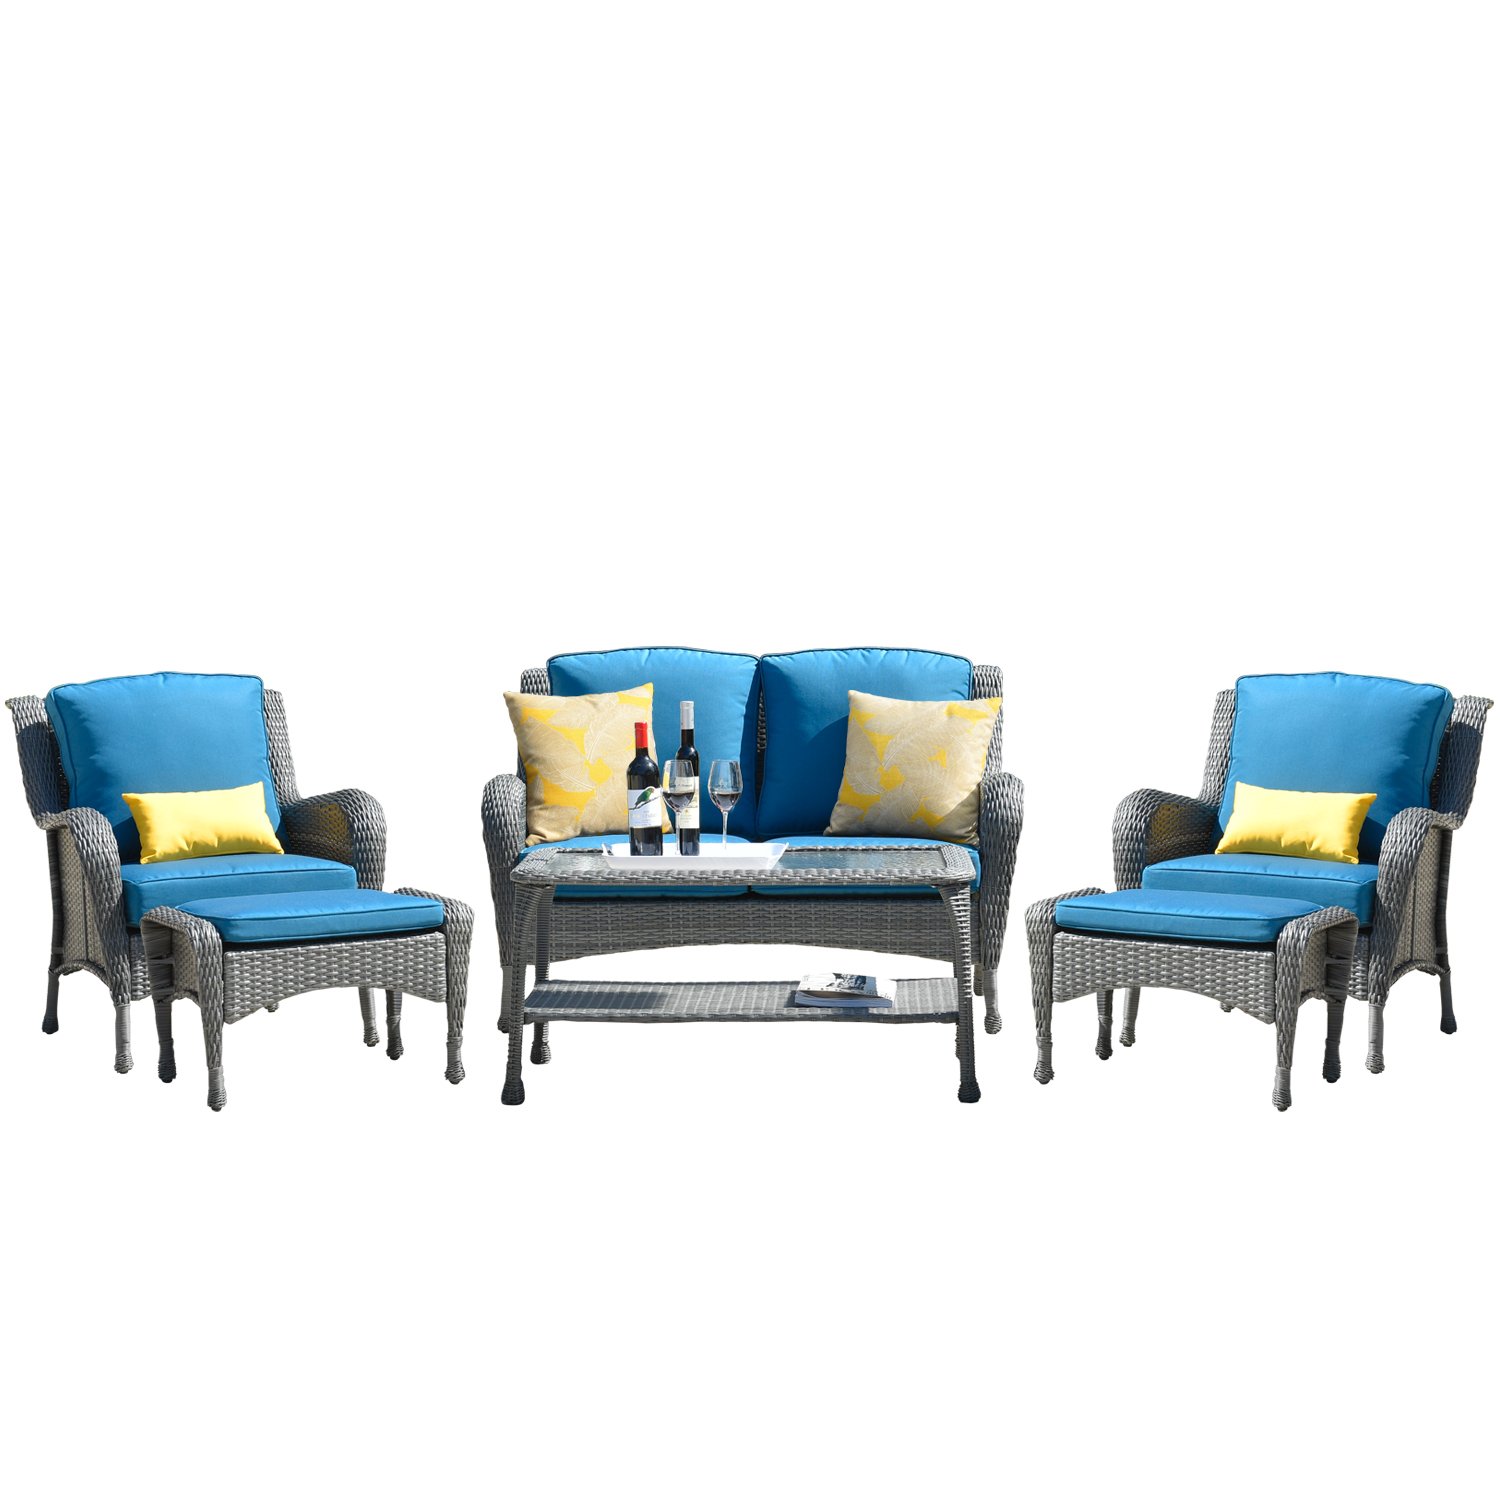 Casainc Gray of 4-Piece Metal Patio Conversation Set with Blue cushions-CASAINC